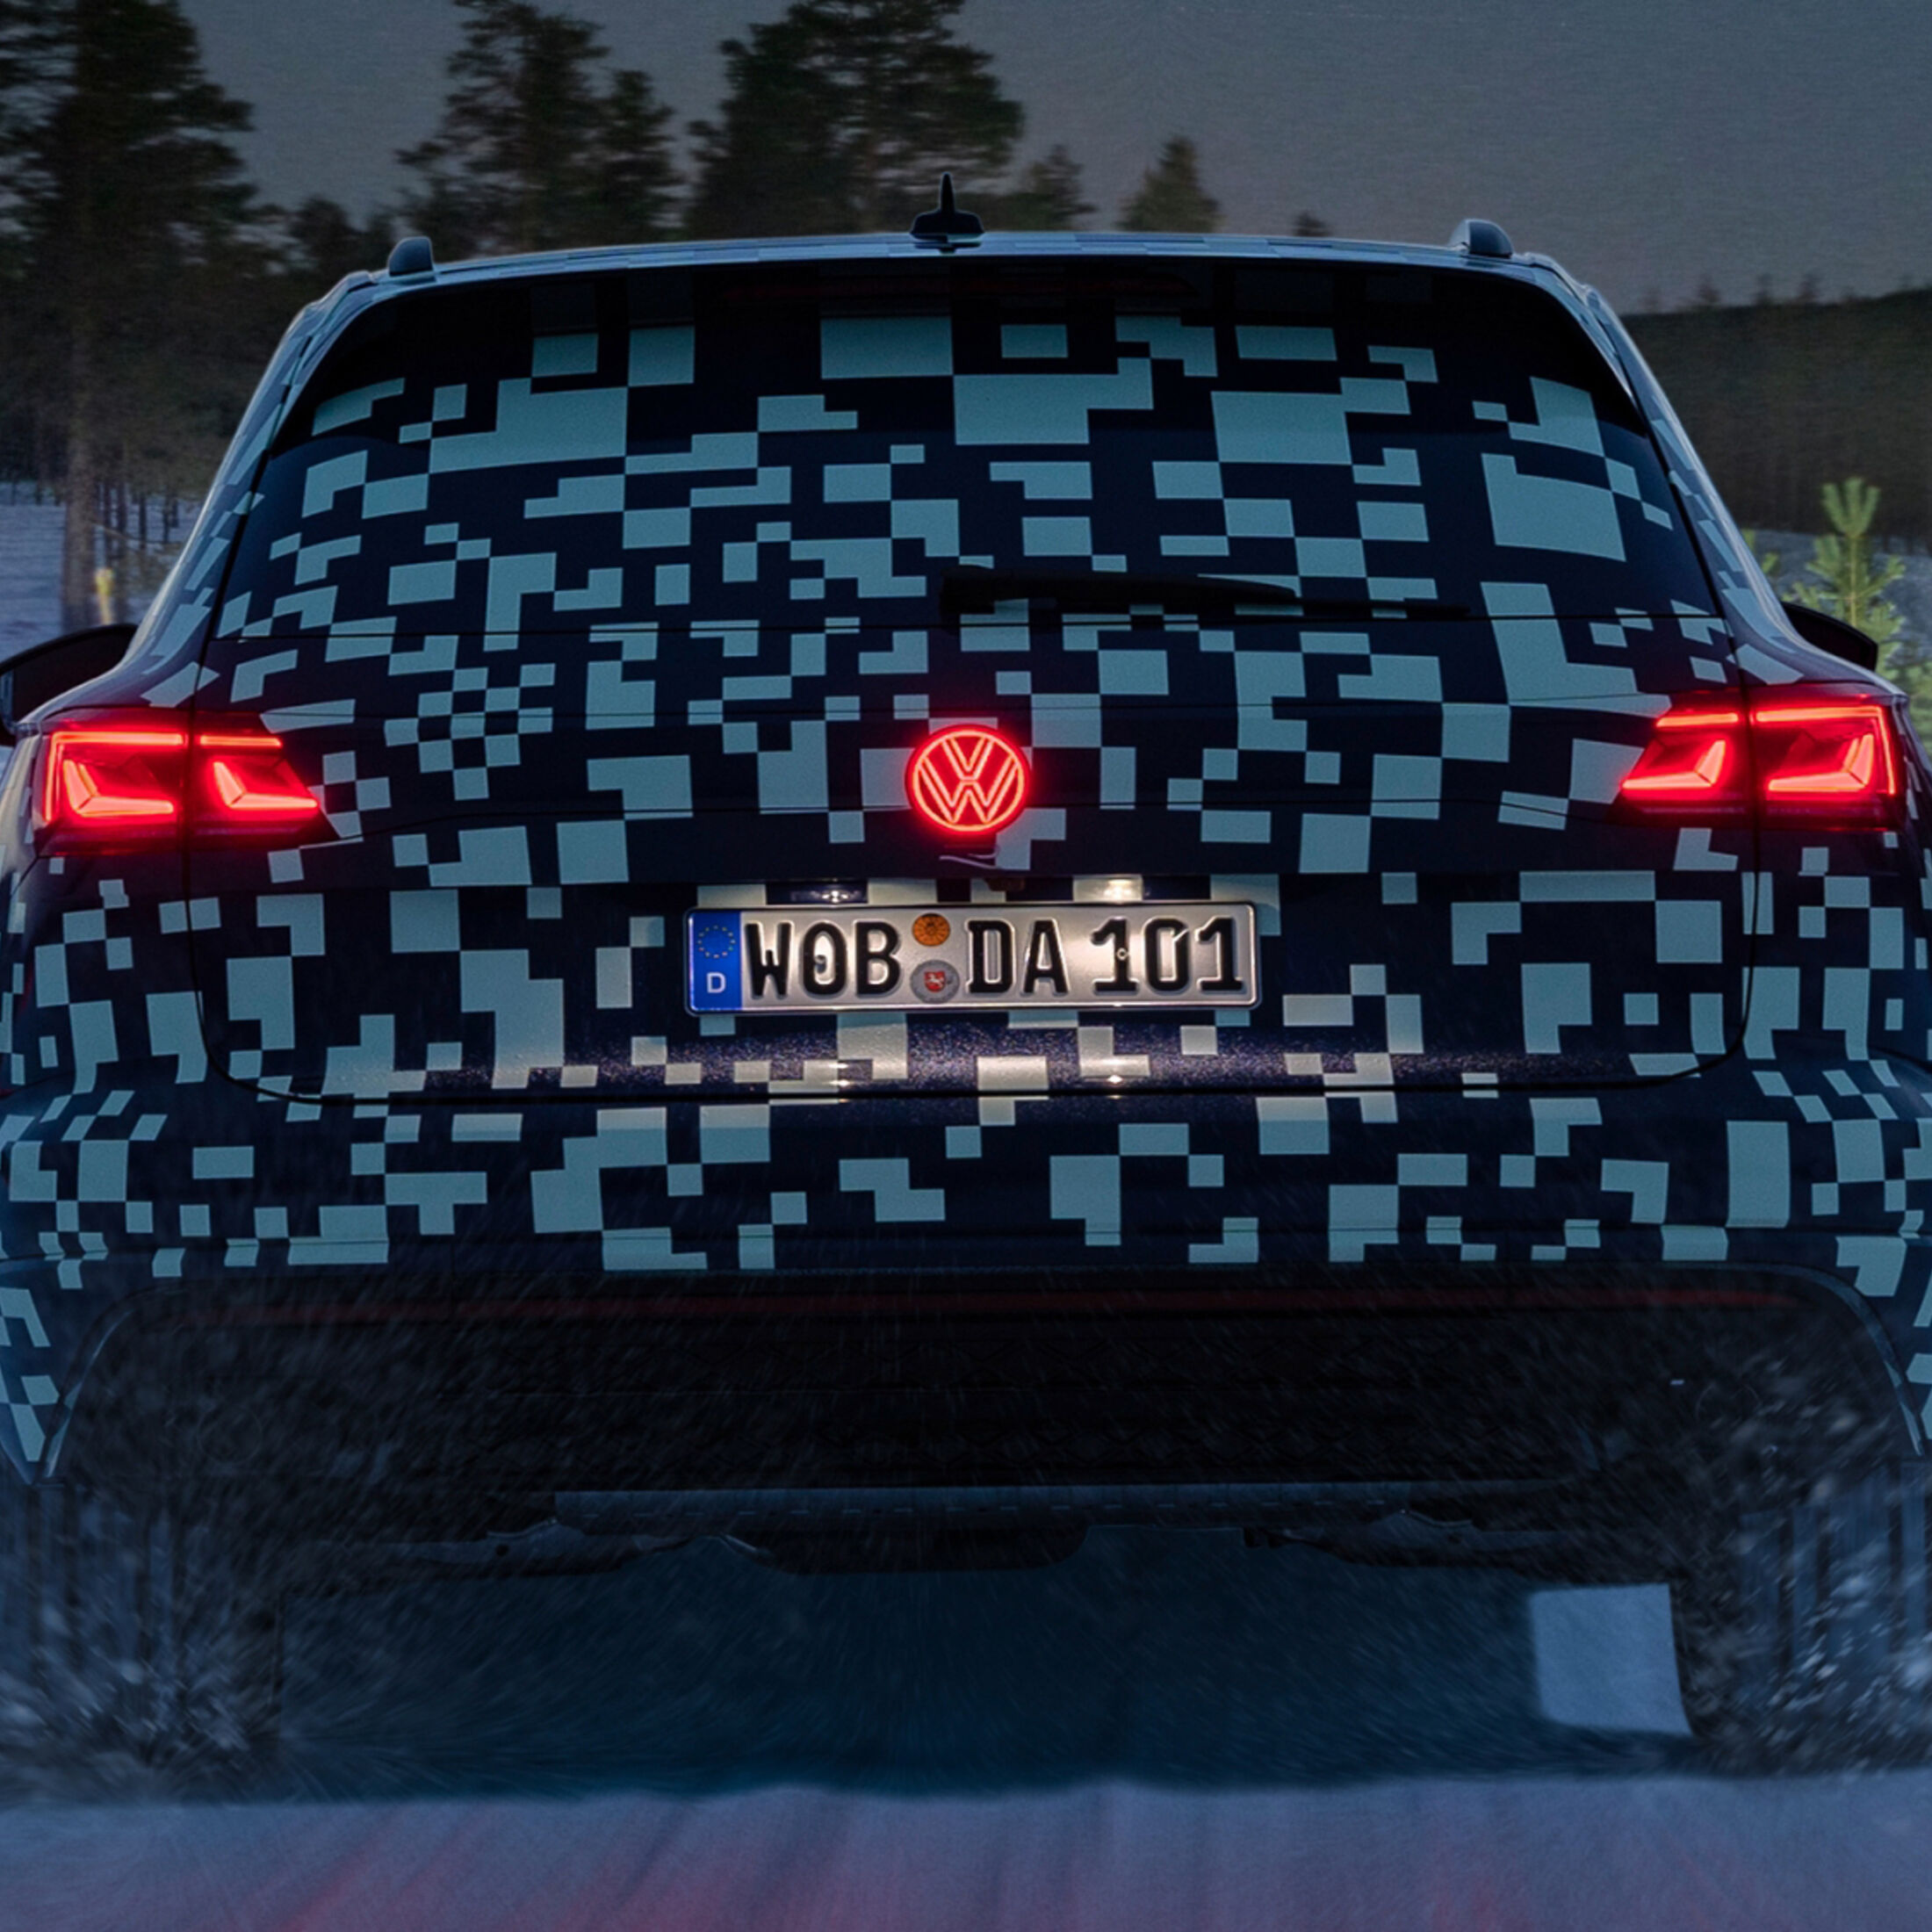 Neuer VW Touareg erhält leuchtende Logos